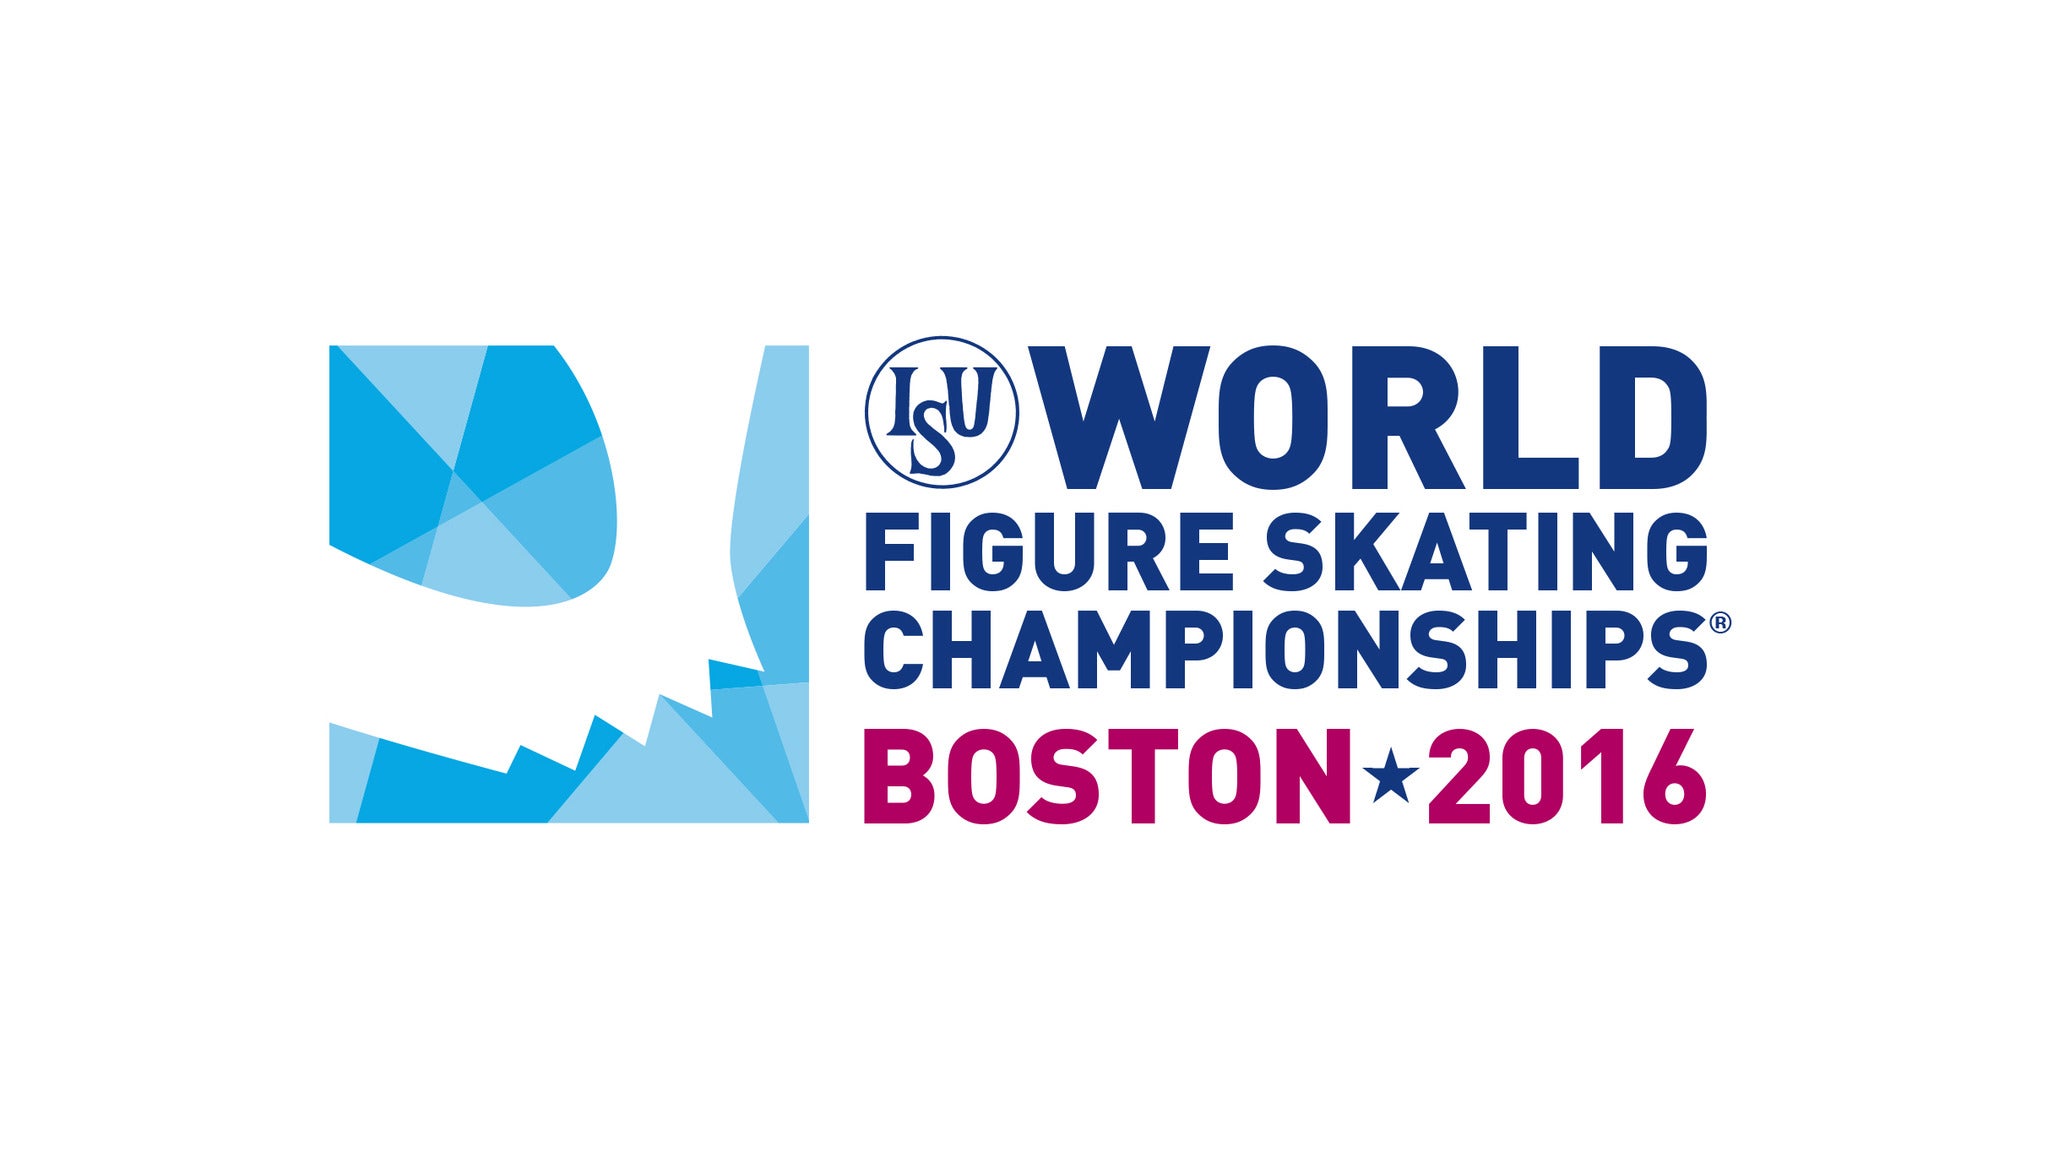 Worlds ISU Figure Skating Championship Tickets Single Game Tickets